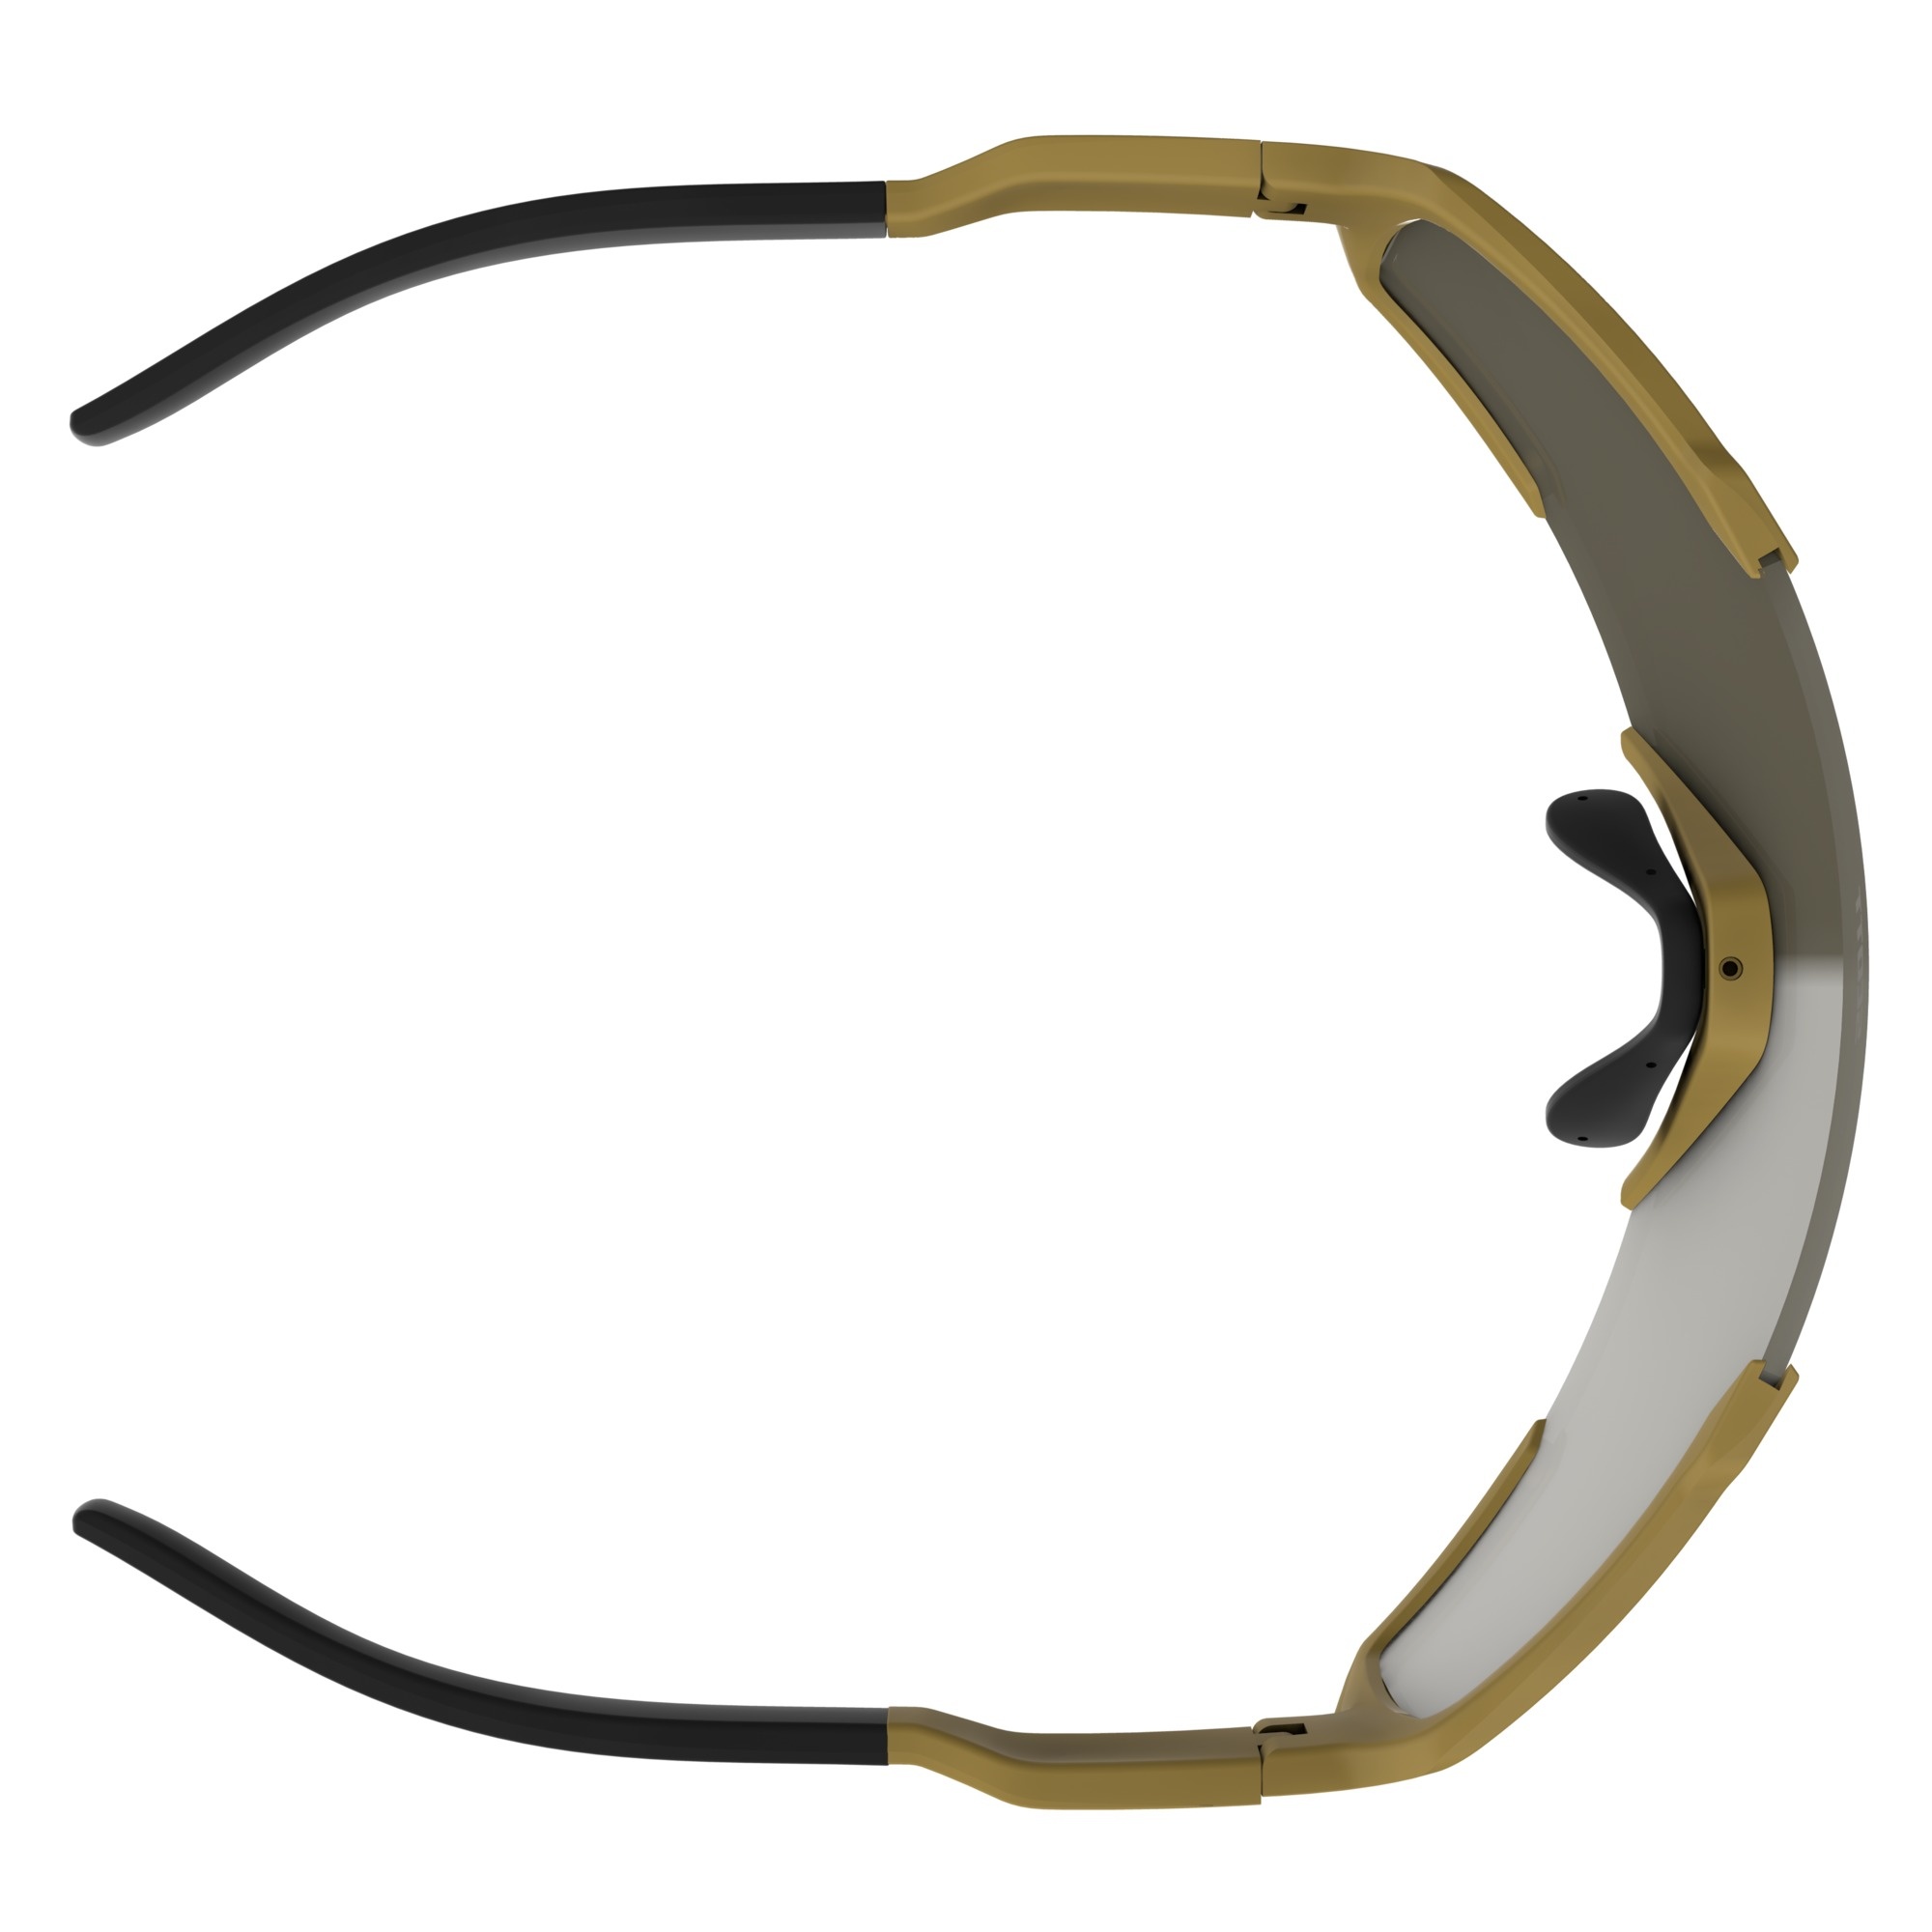 Beklædning - Cykelbriller - Scott Shield Compact Cykelbrille - Gul/Brun